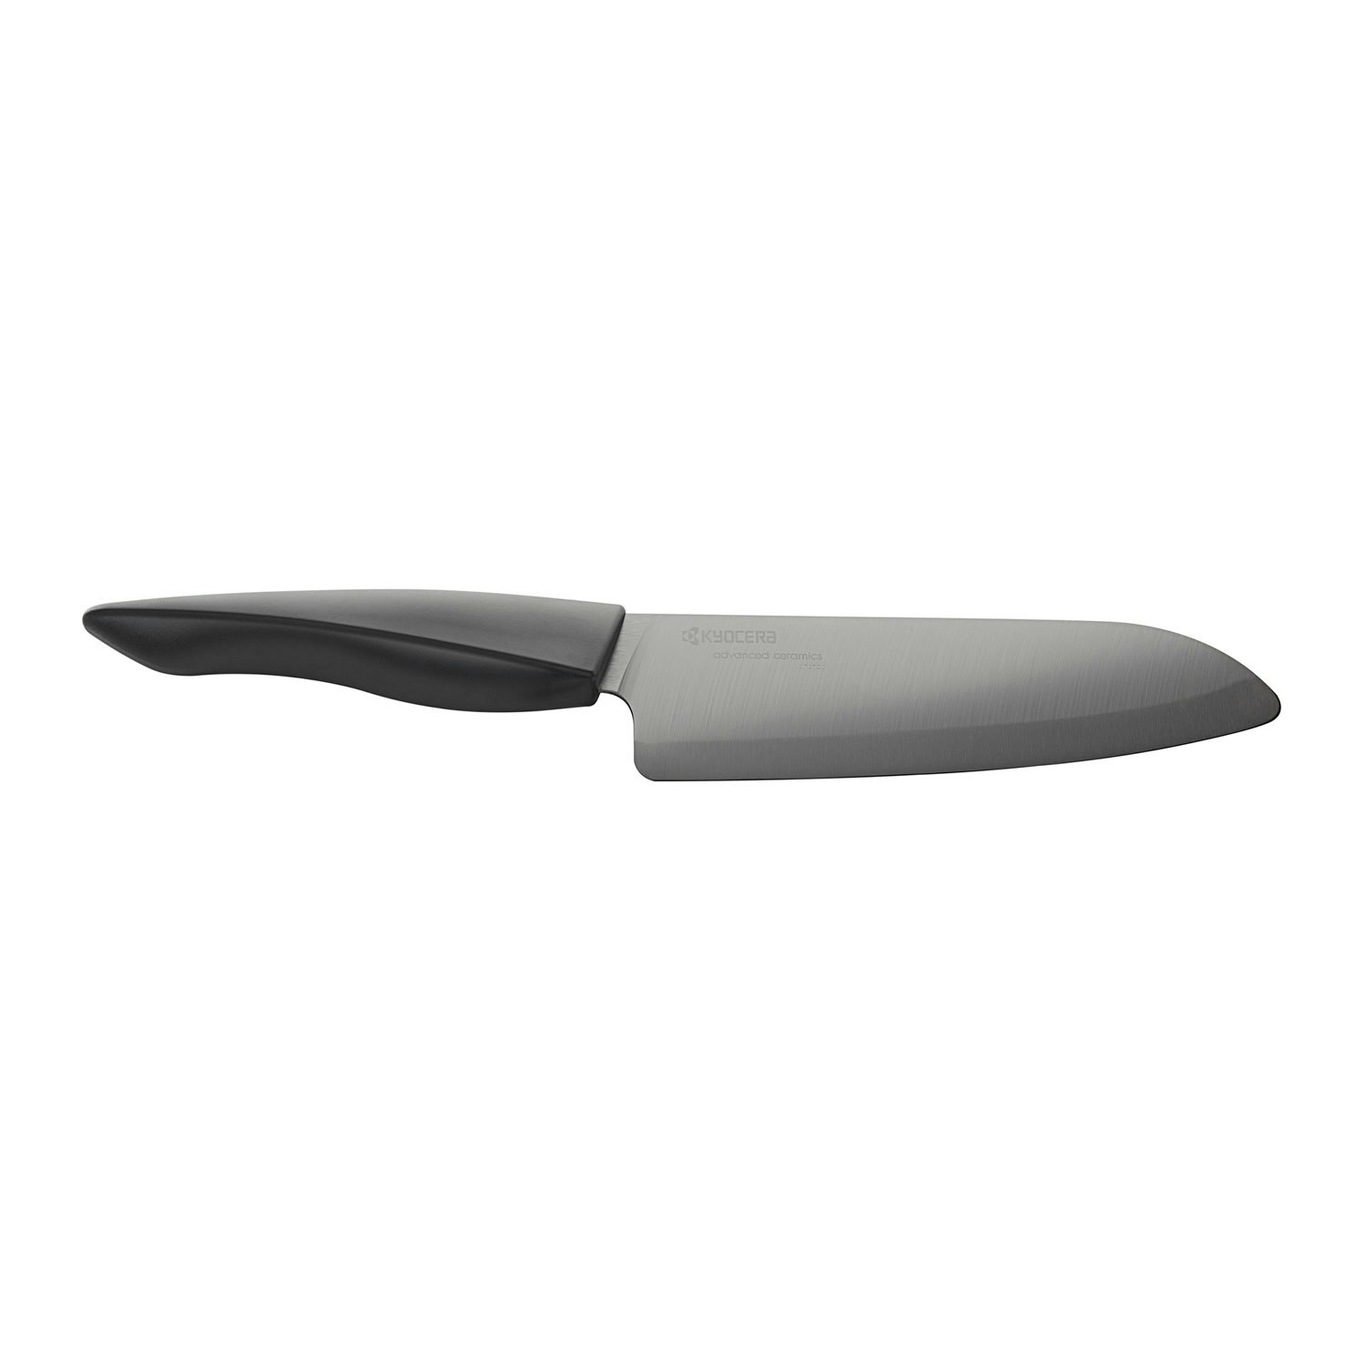 https://royaldesign.com/image/2/kyocera-shin-chef-knife-santoku-knife-16-cm-black-0?w=800&quality=80